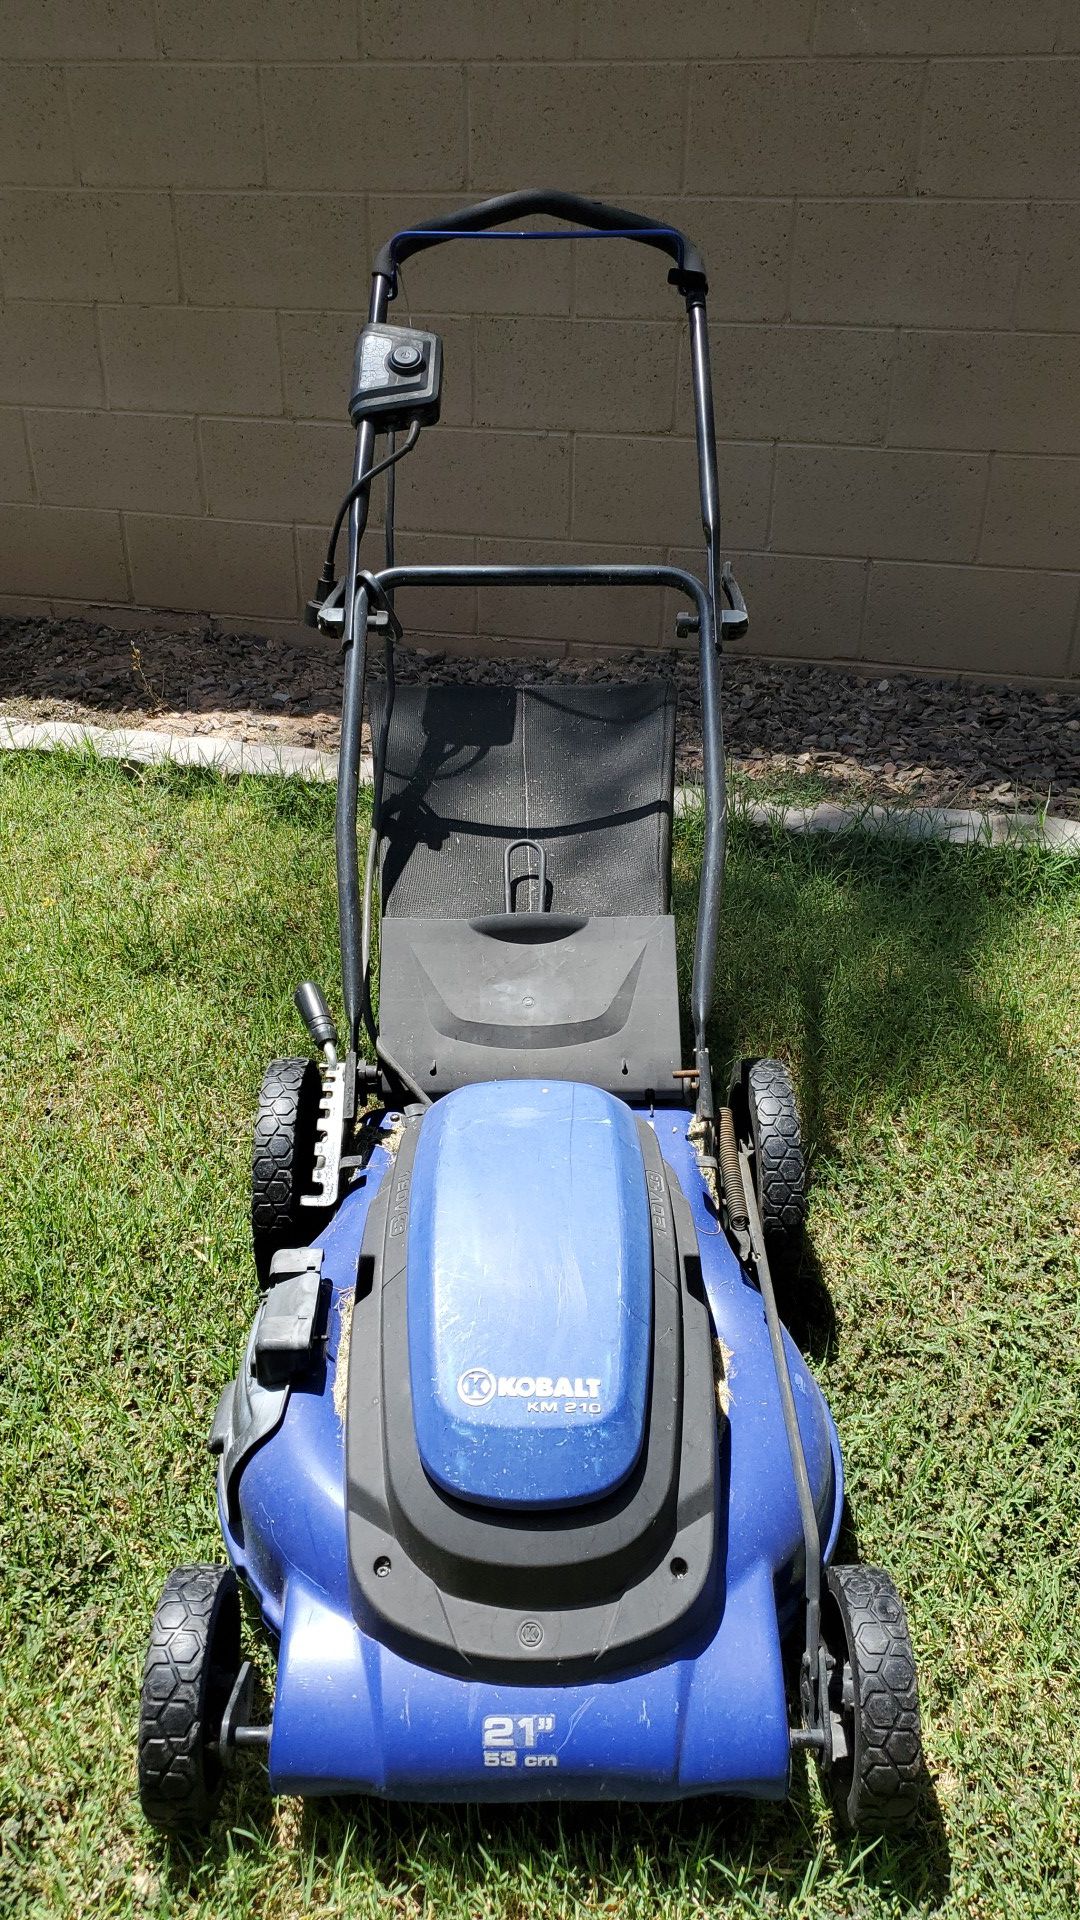 Kobalt KM 210 21" lawn mower